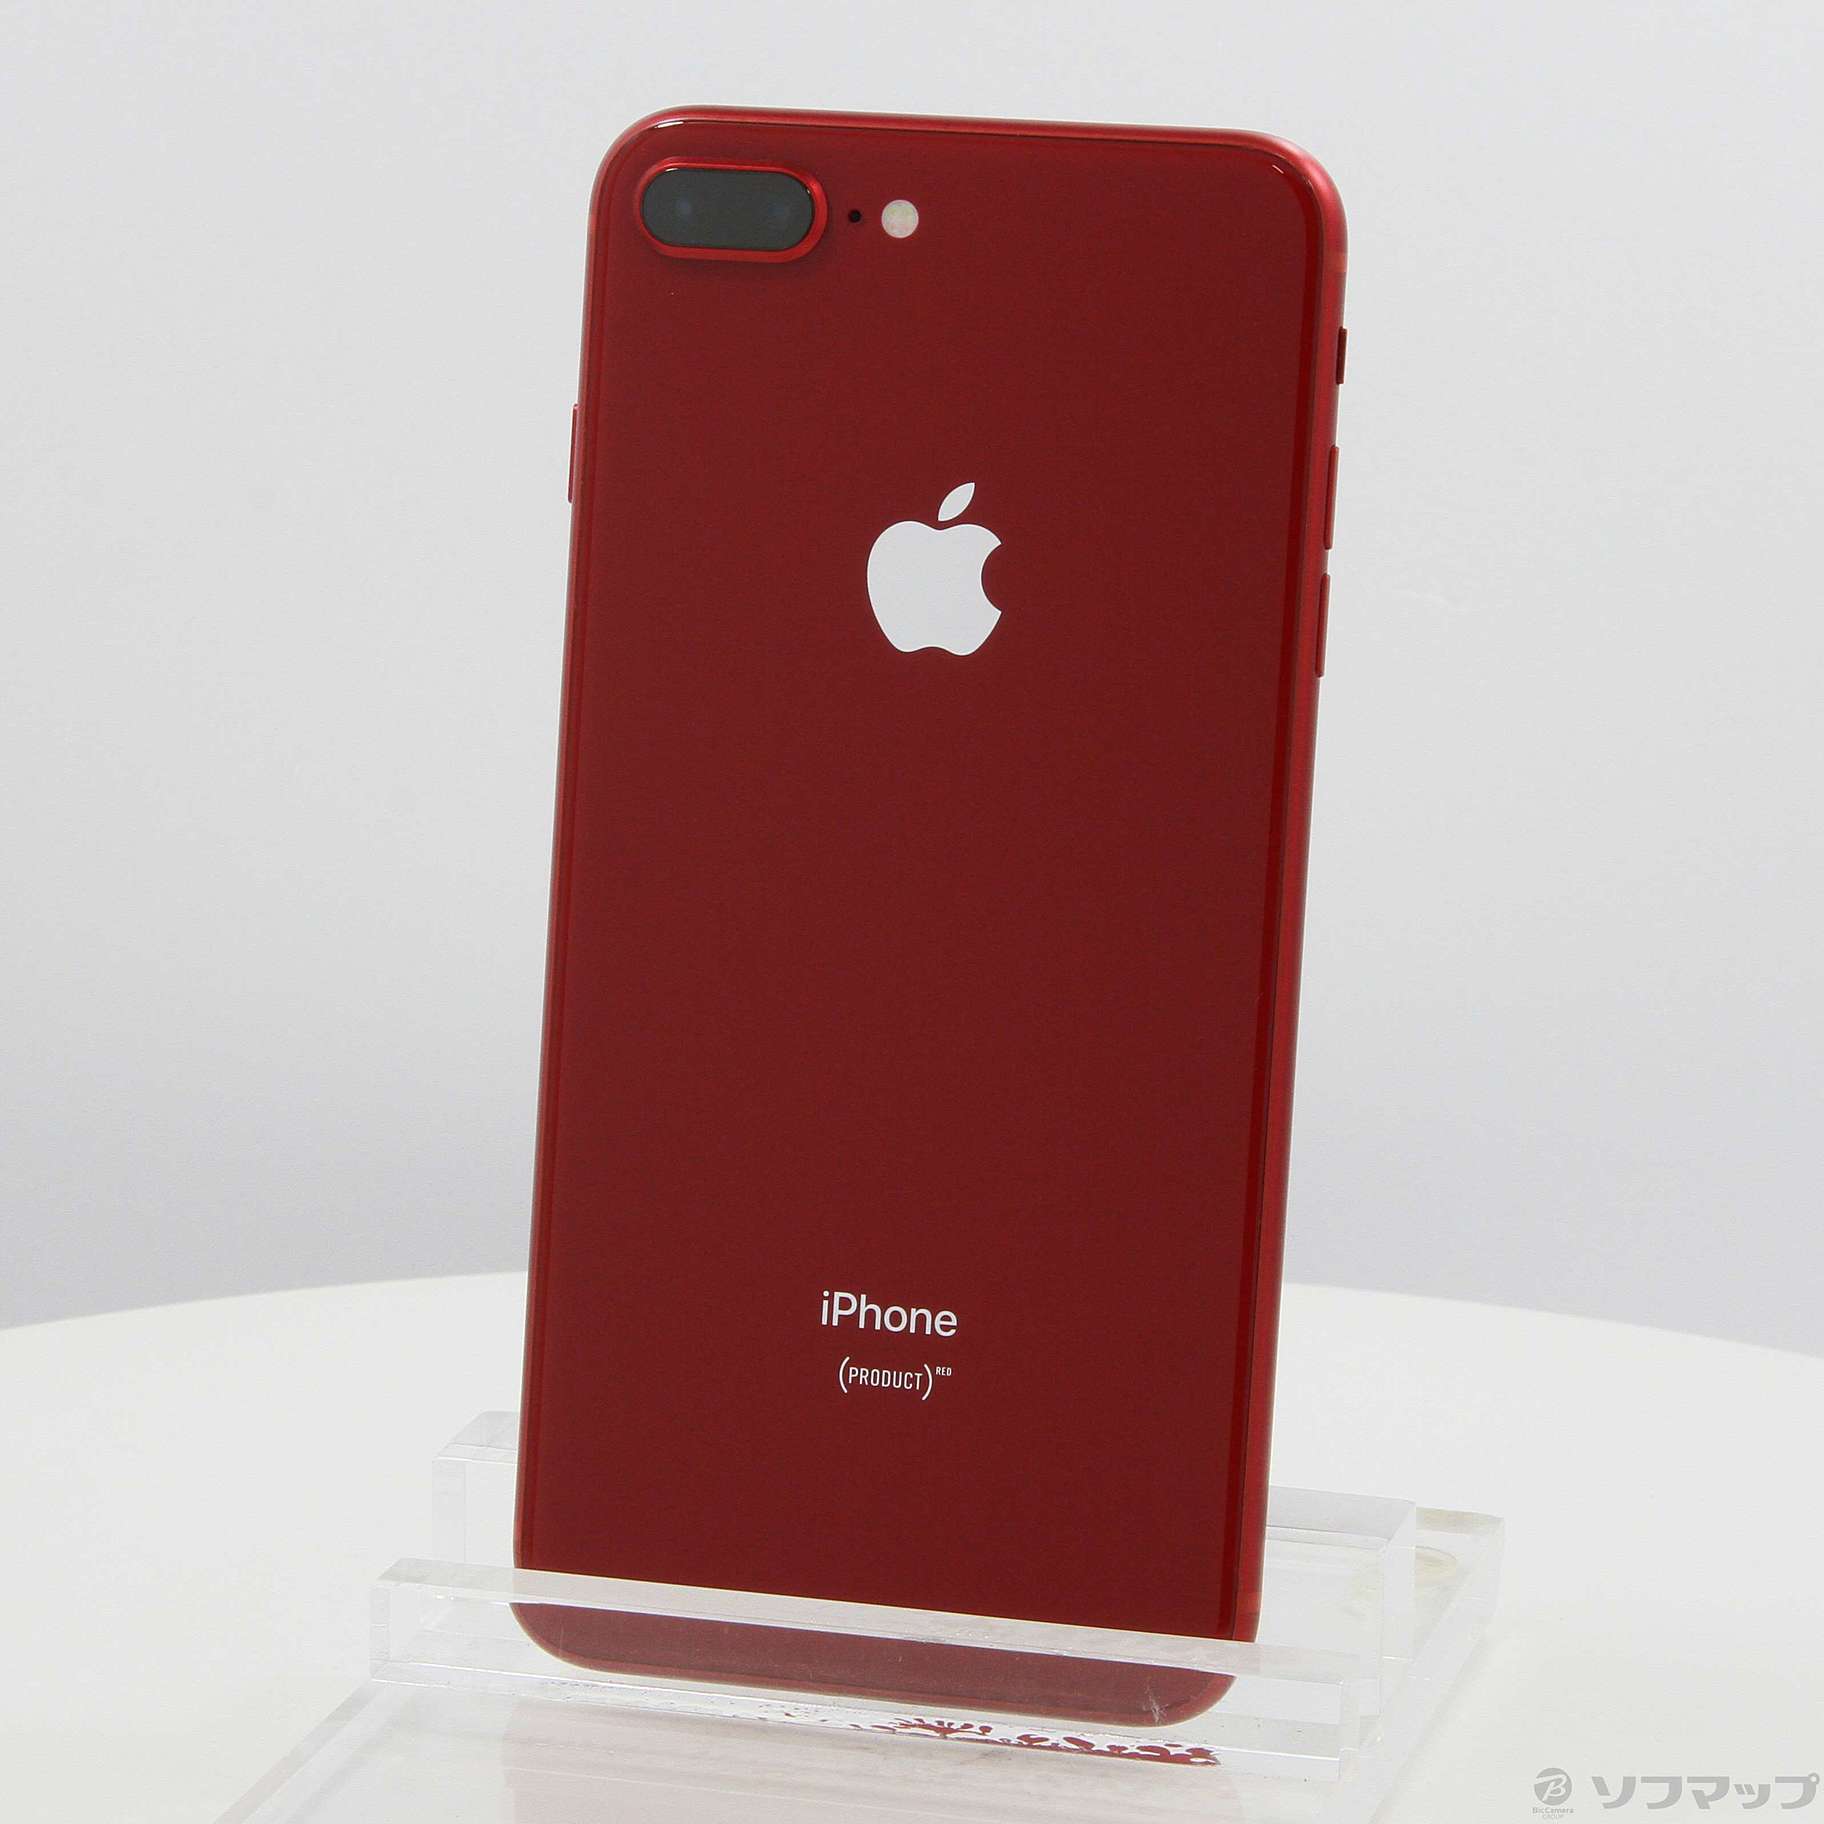 iPhone8 plus (RED) 64GB SIMフリー used-